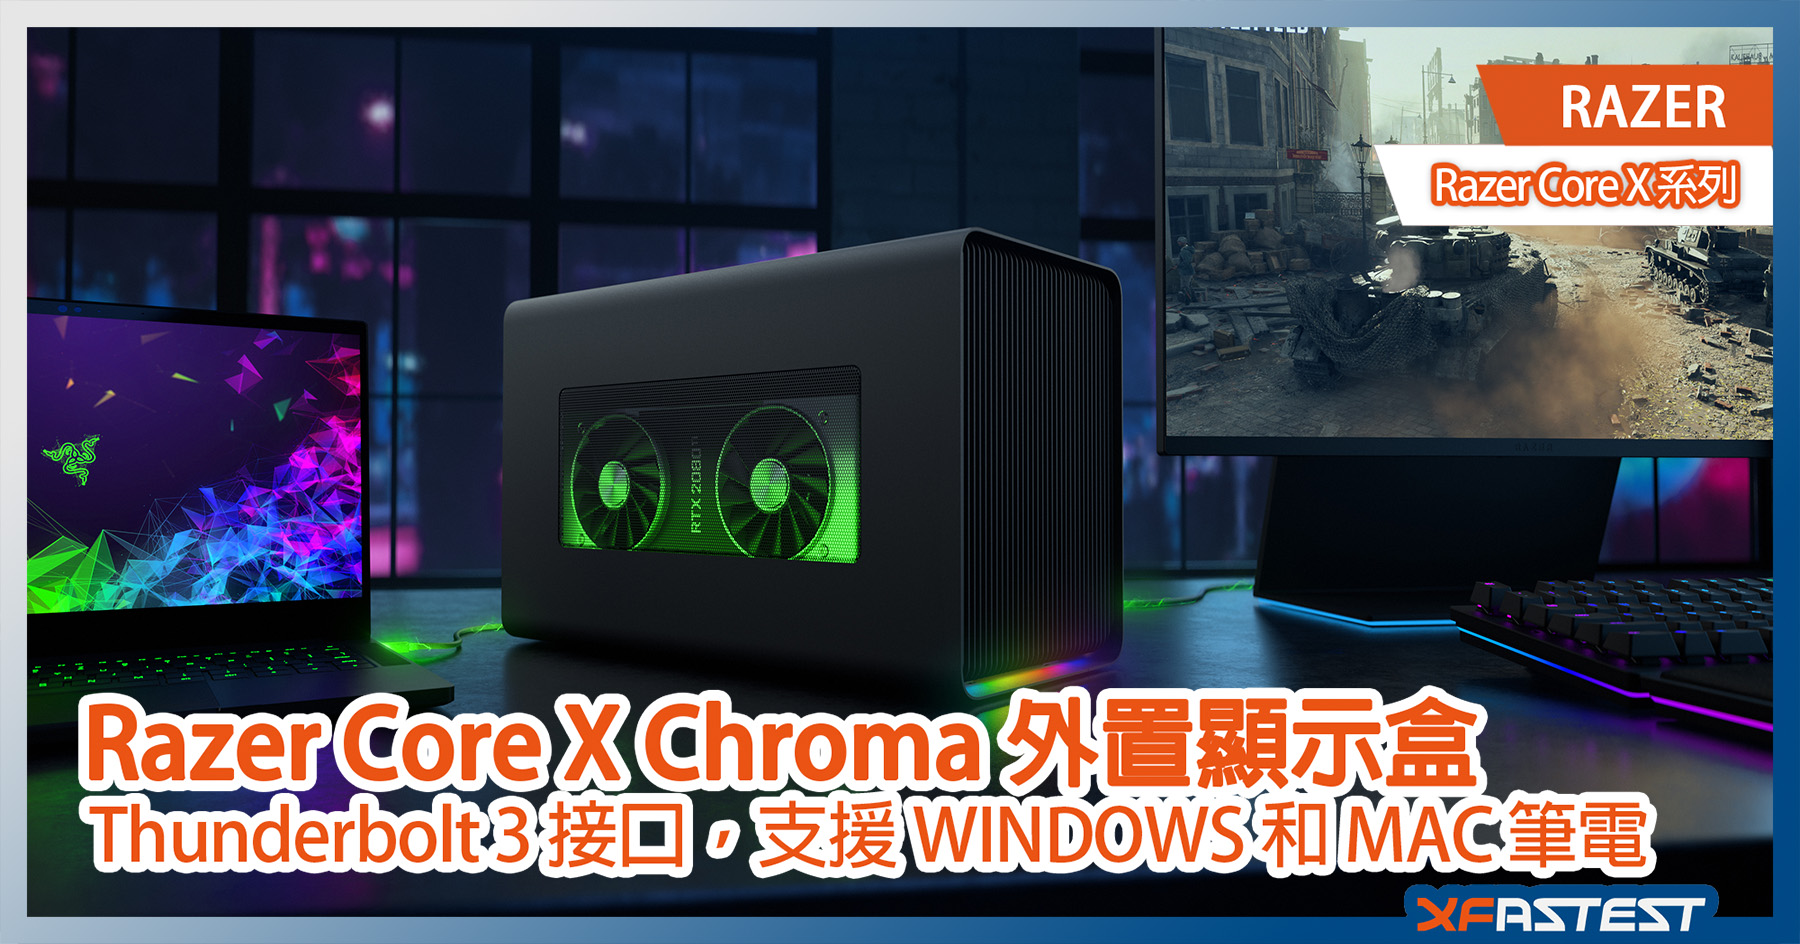 RAZER 全新CORE X CHROMA 強力支援WINDOWS 和MAC 筆電- XFastest Hong Kong